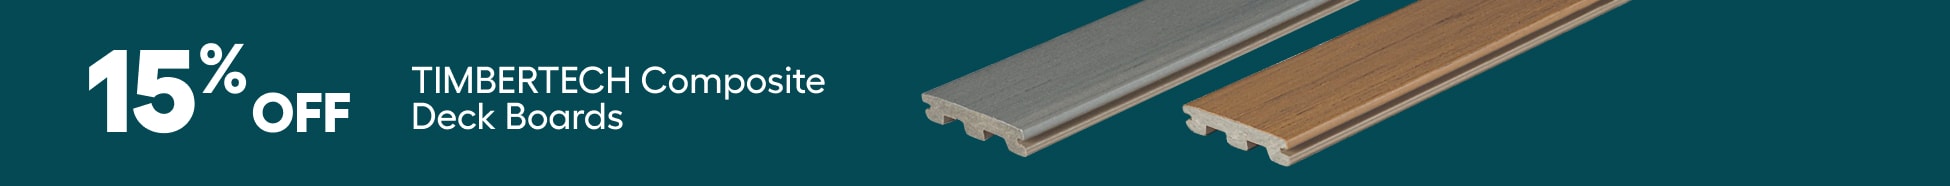 TIMBERTECH Composite Deck Boards